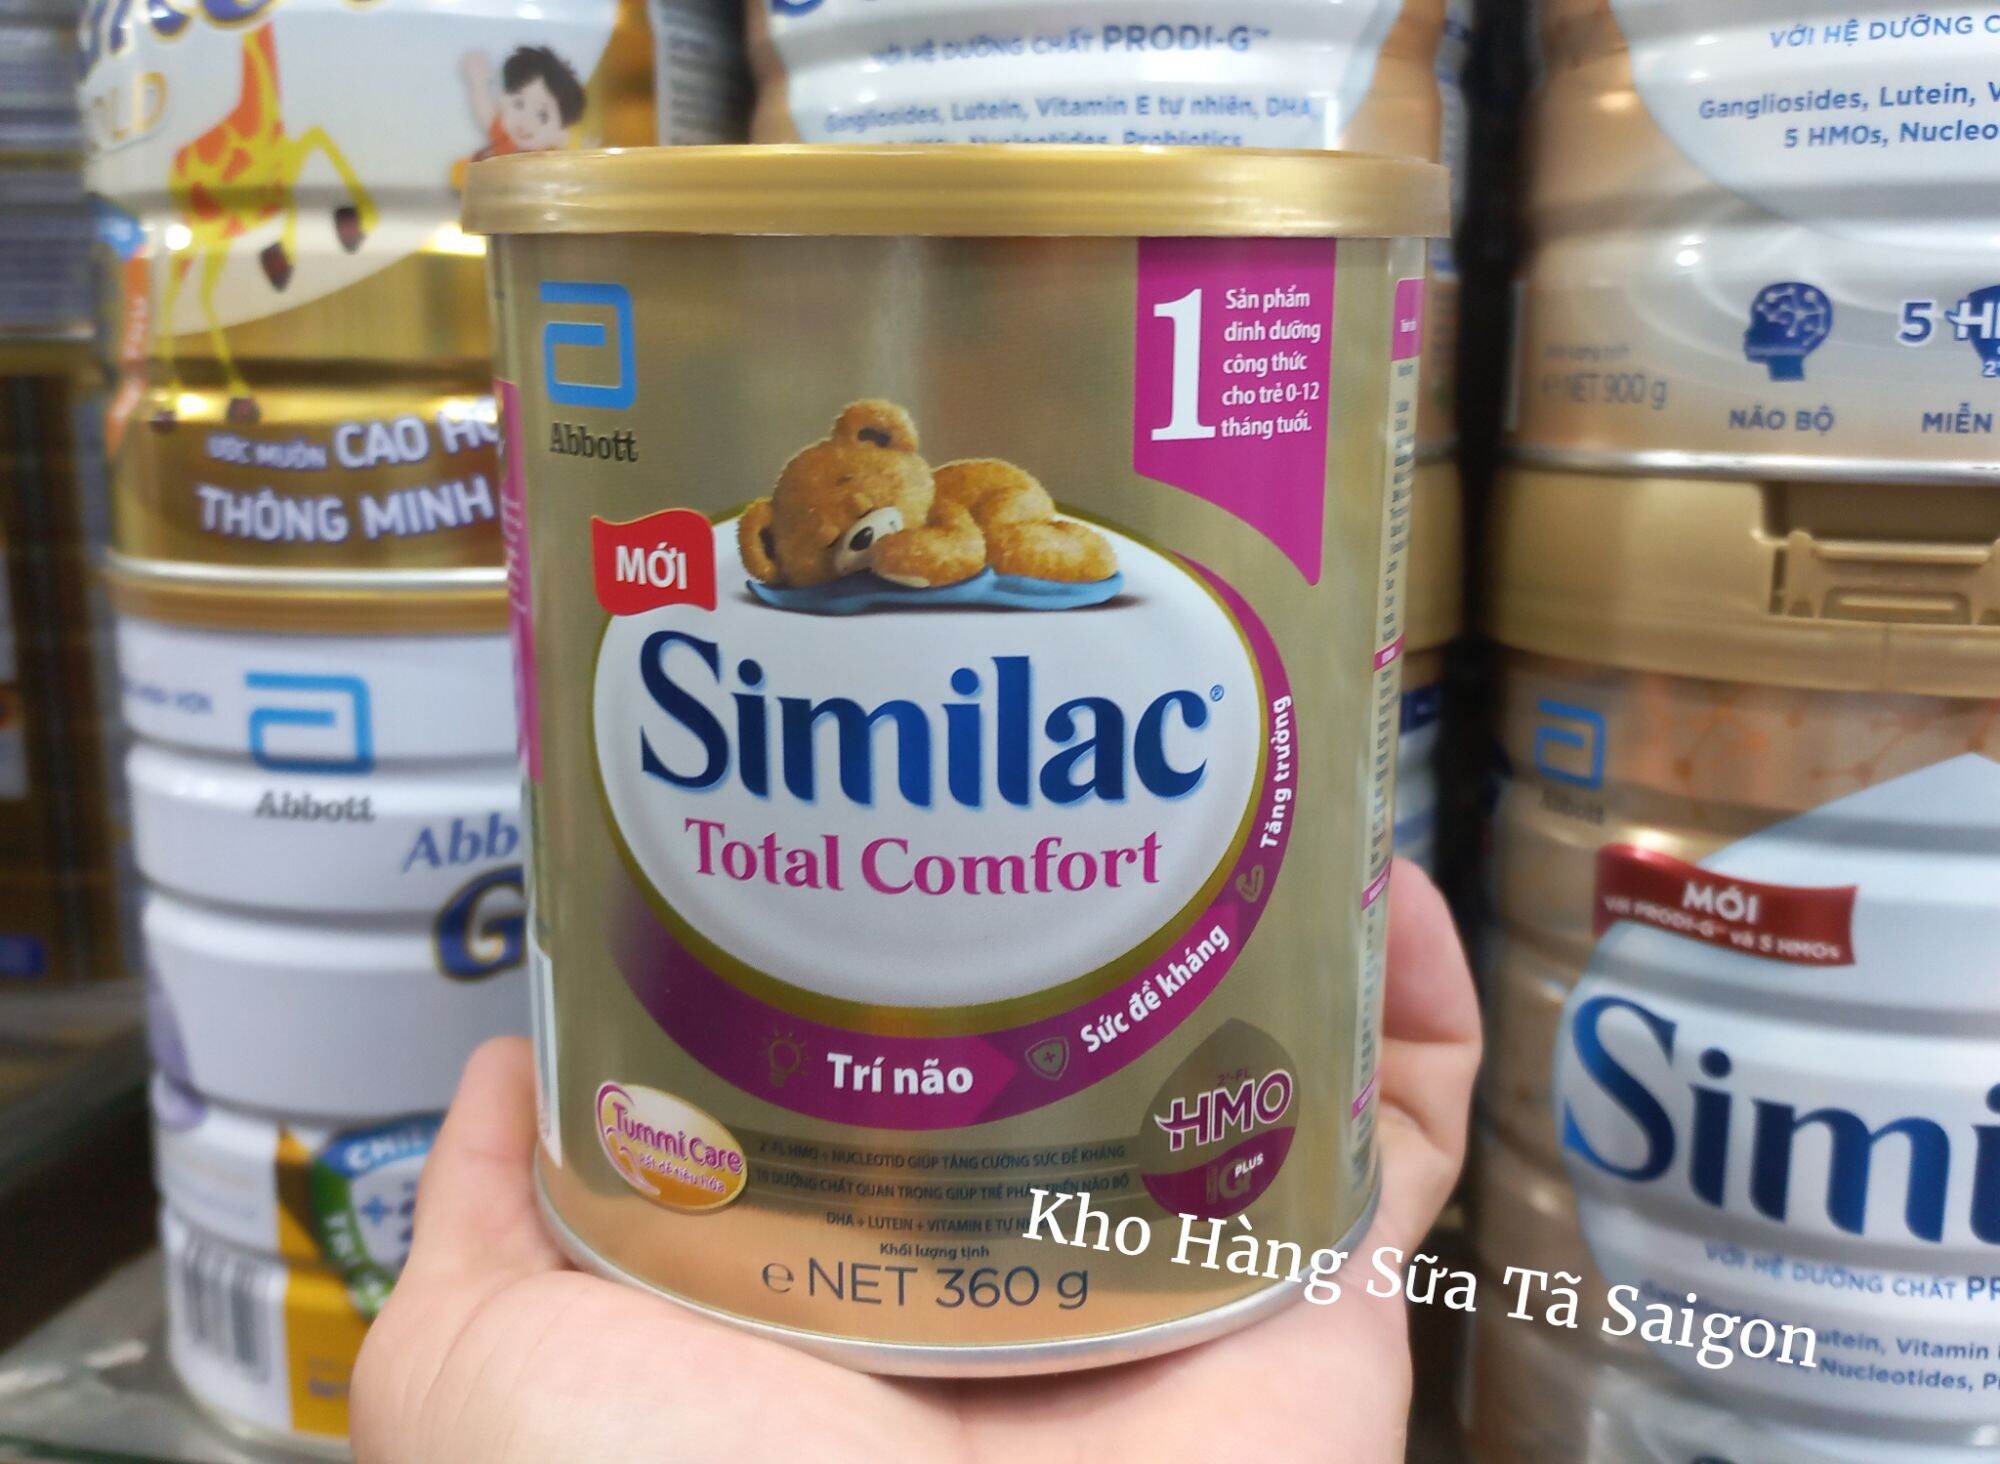 Sữa Similac Total Comfort. Lon 360gam của Abbott. Date xa